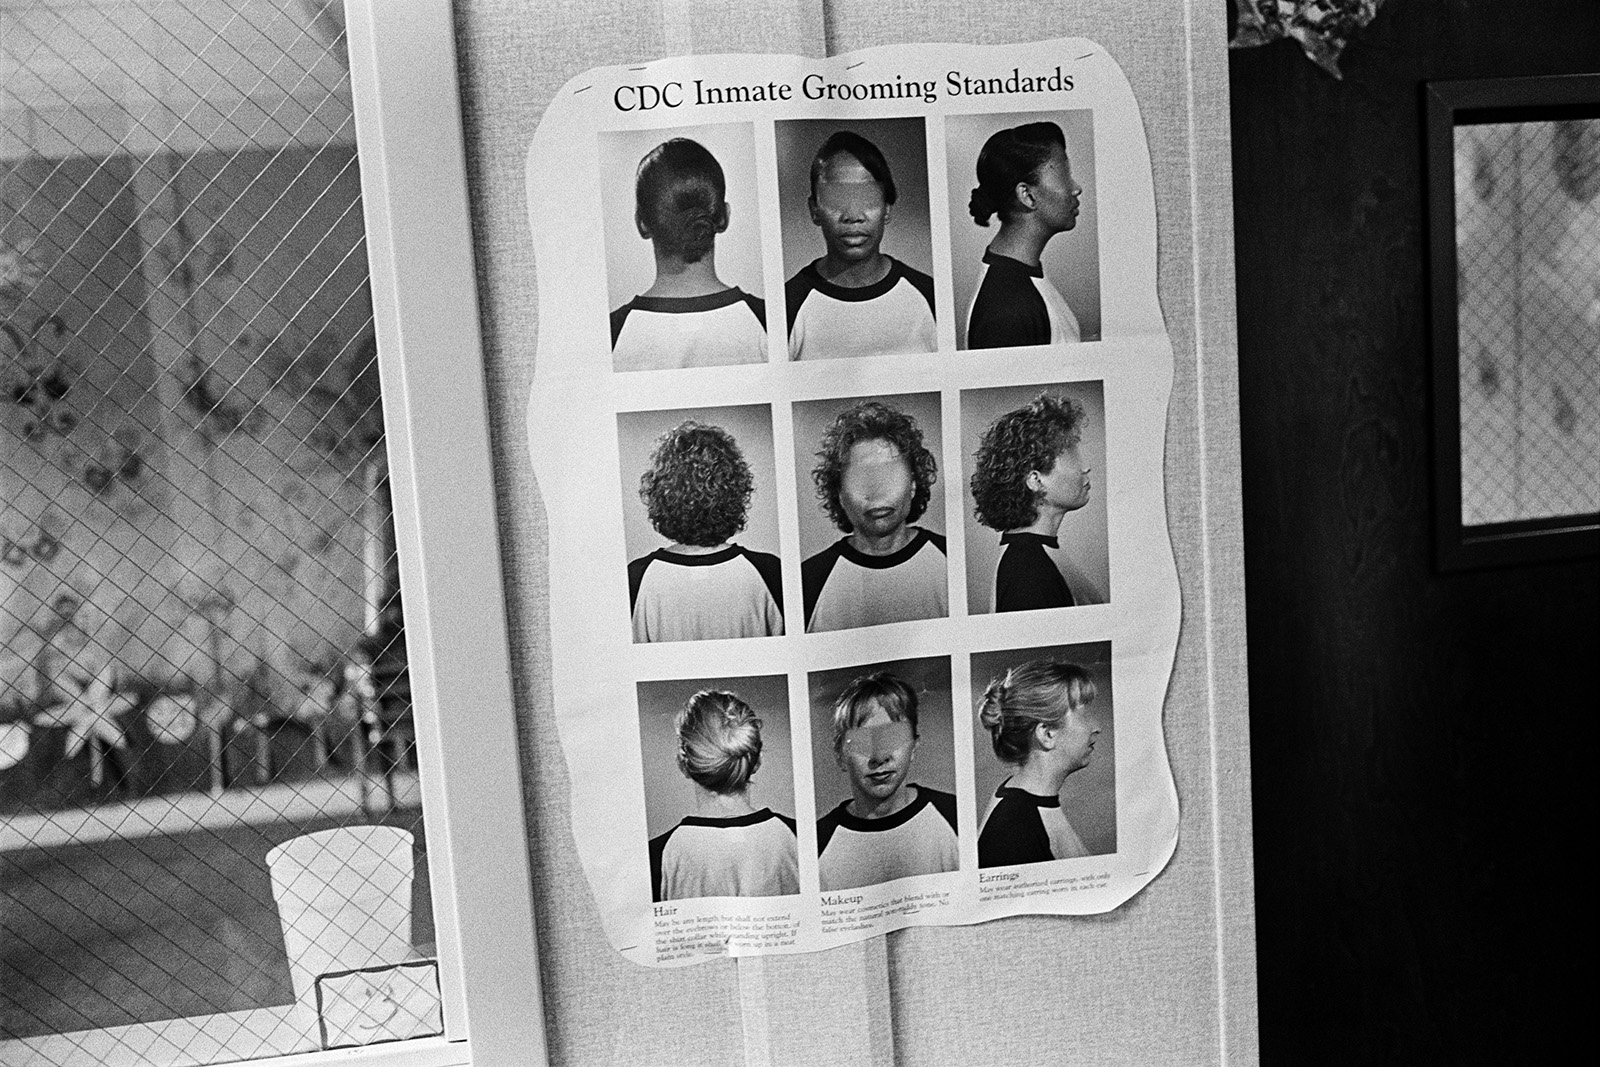 Women Only State Prison, Chowchilla, California, 2006